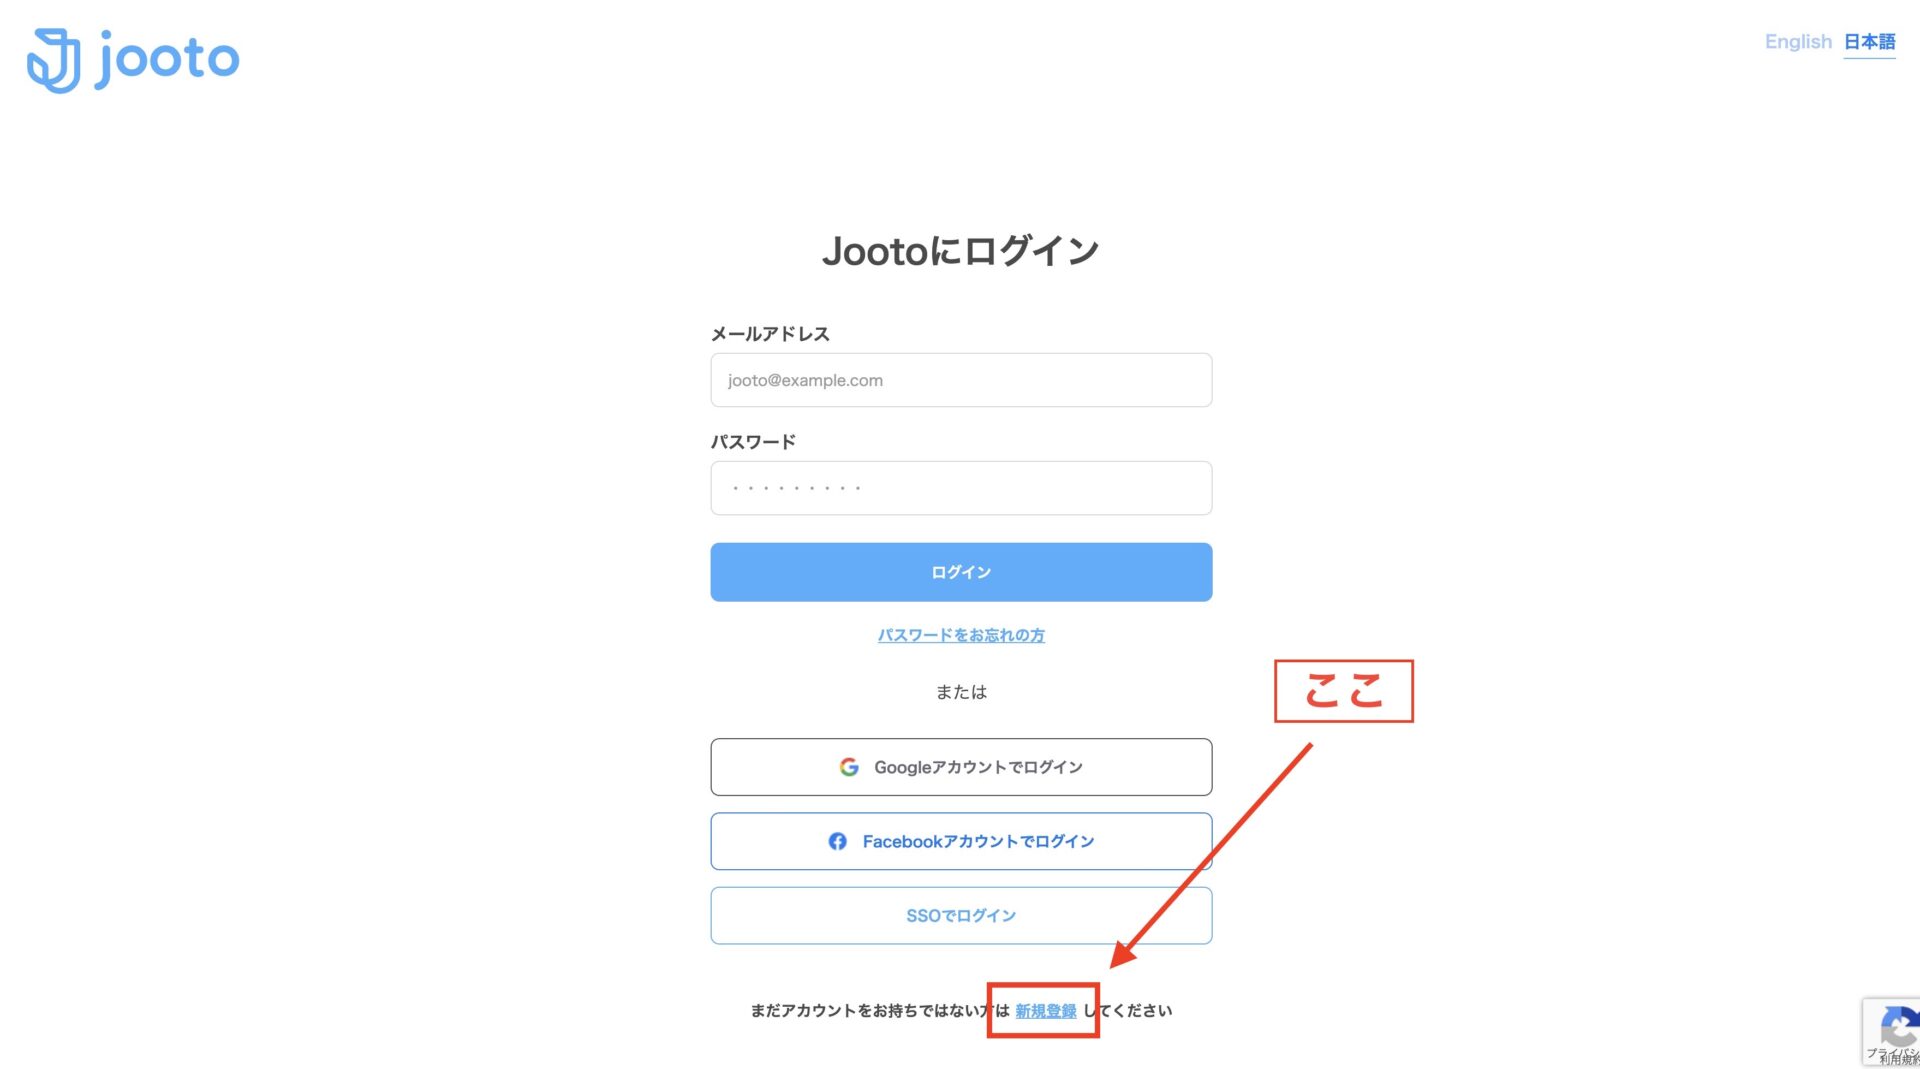 Jootoの新規登録ボタンの位置